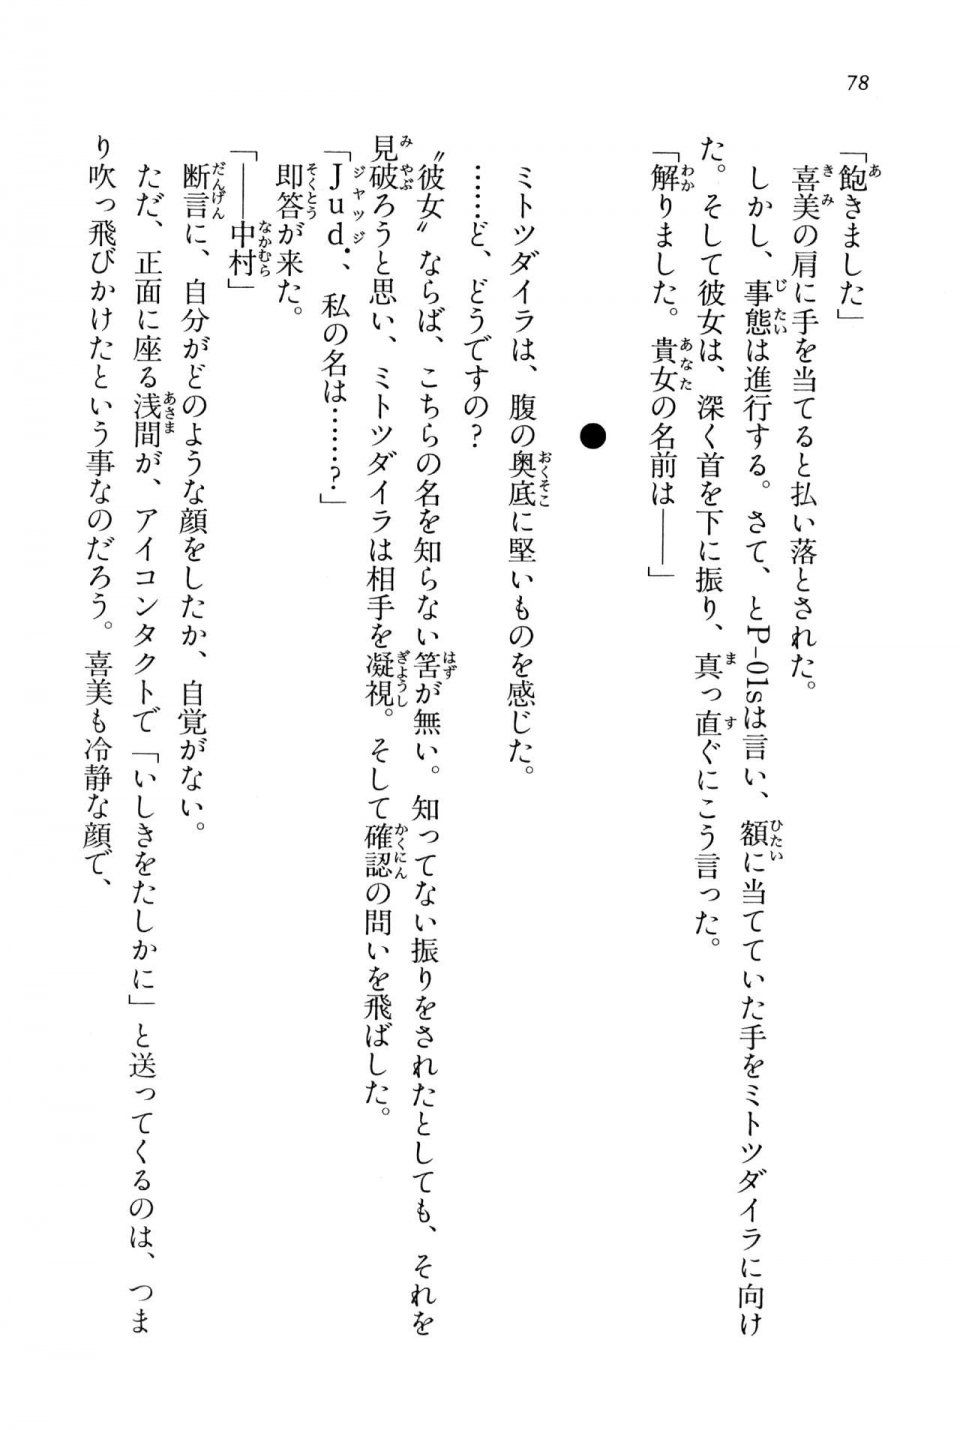 Kyoukai Senjou no Horizon BD Special Mininovel Vol 4(2B) - Photo #82